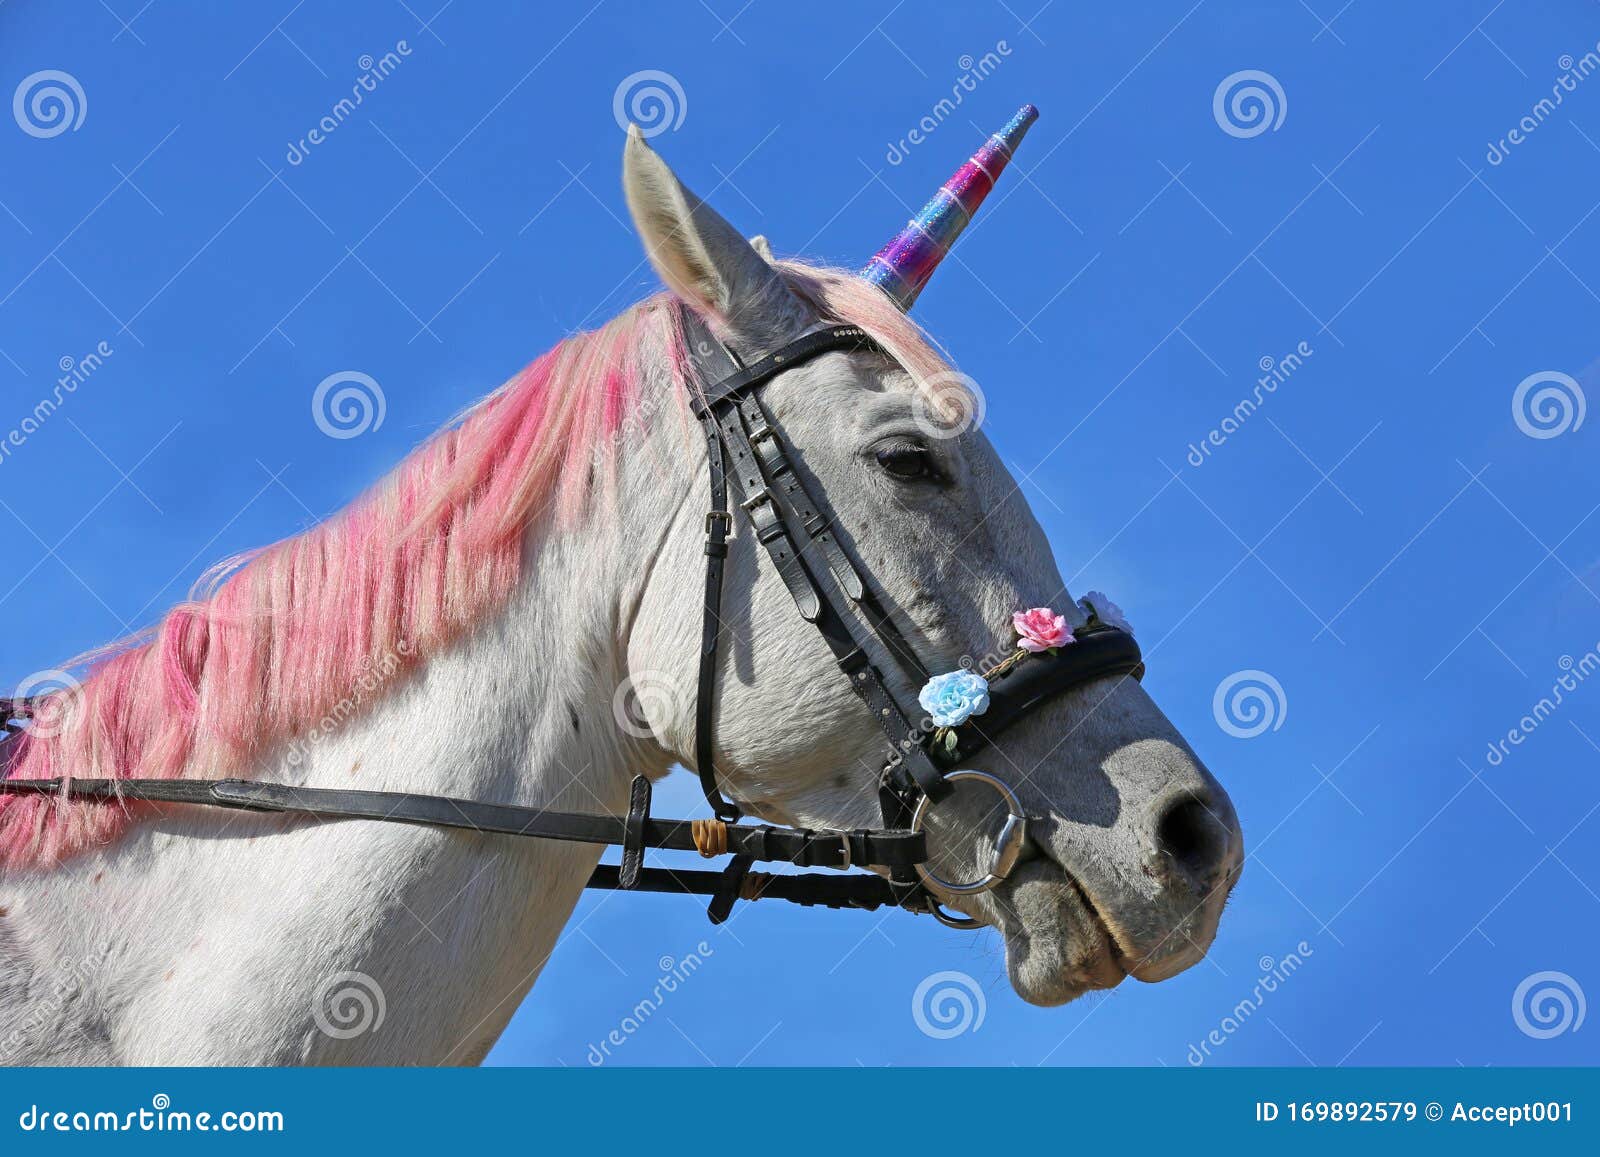 Beautiful Magical Unicorn Horse Realistic Photography Stock Image ...